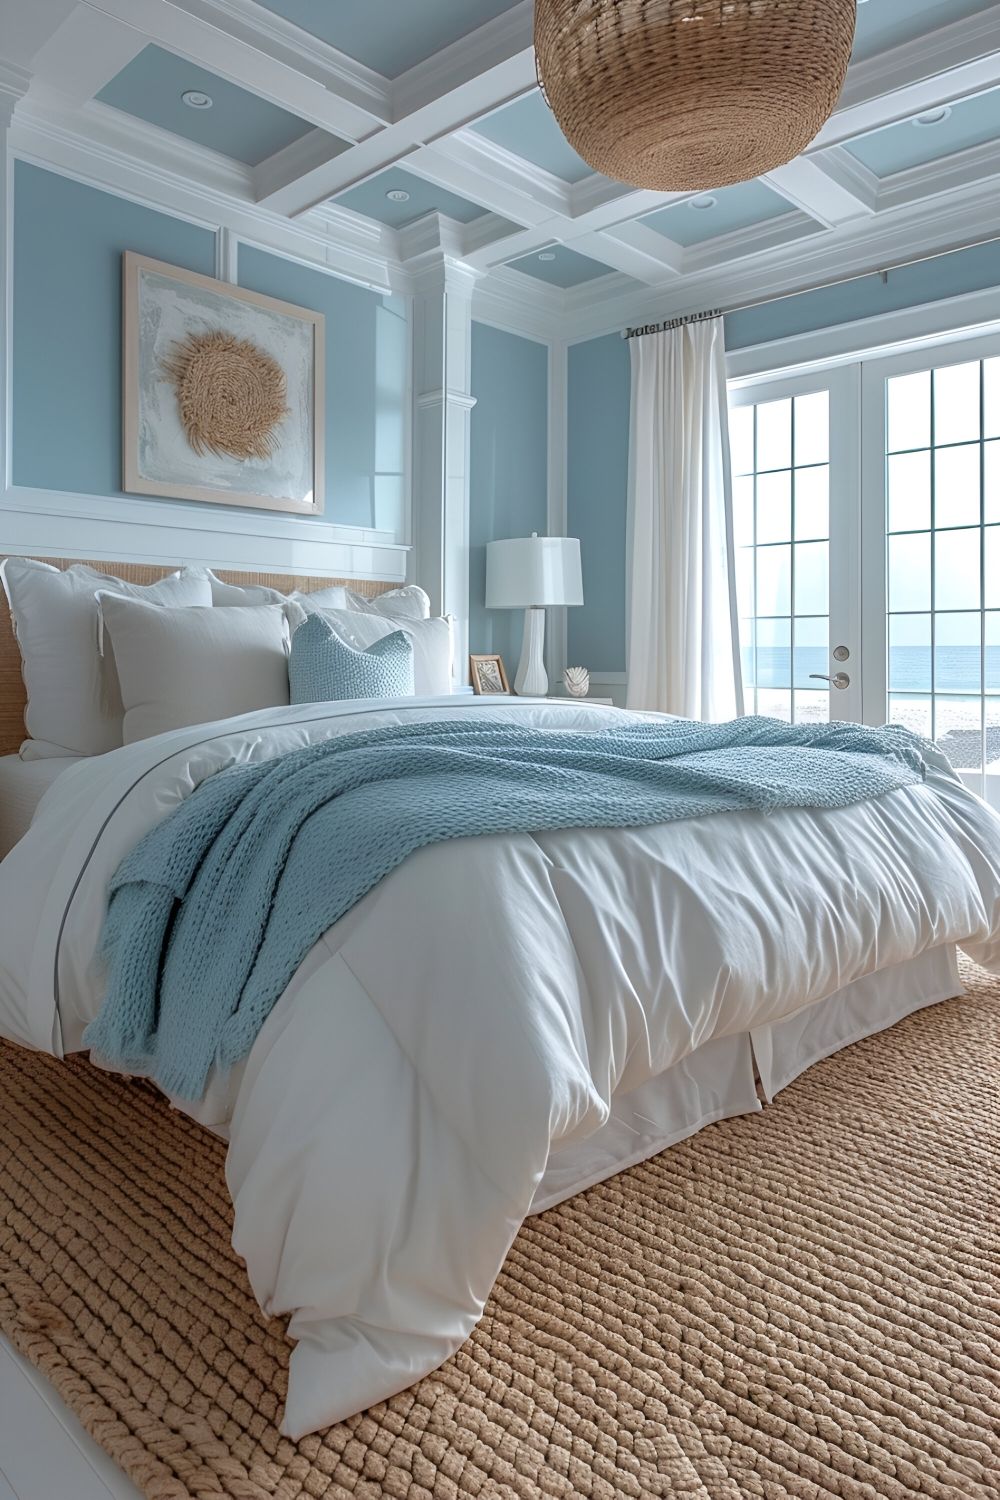 Blue Master Bedroom Elegant and Serene Master Bedroom Decor in Shades of Blue